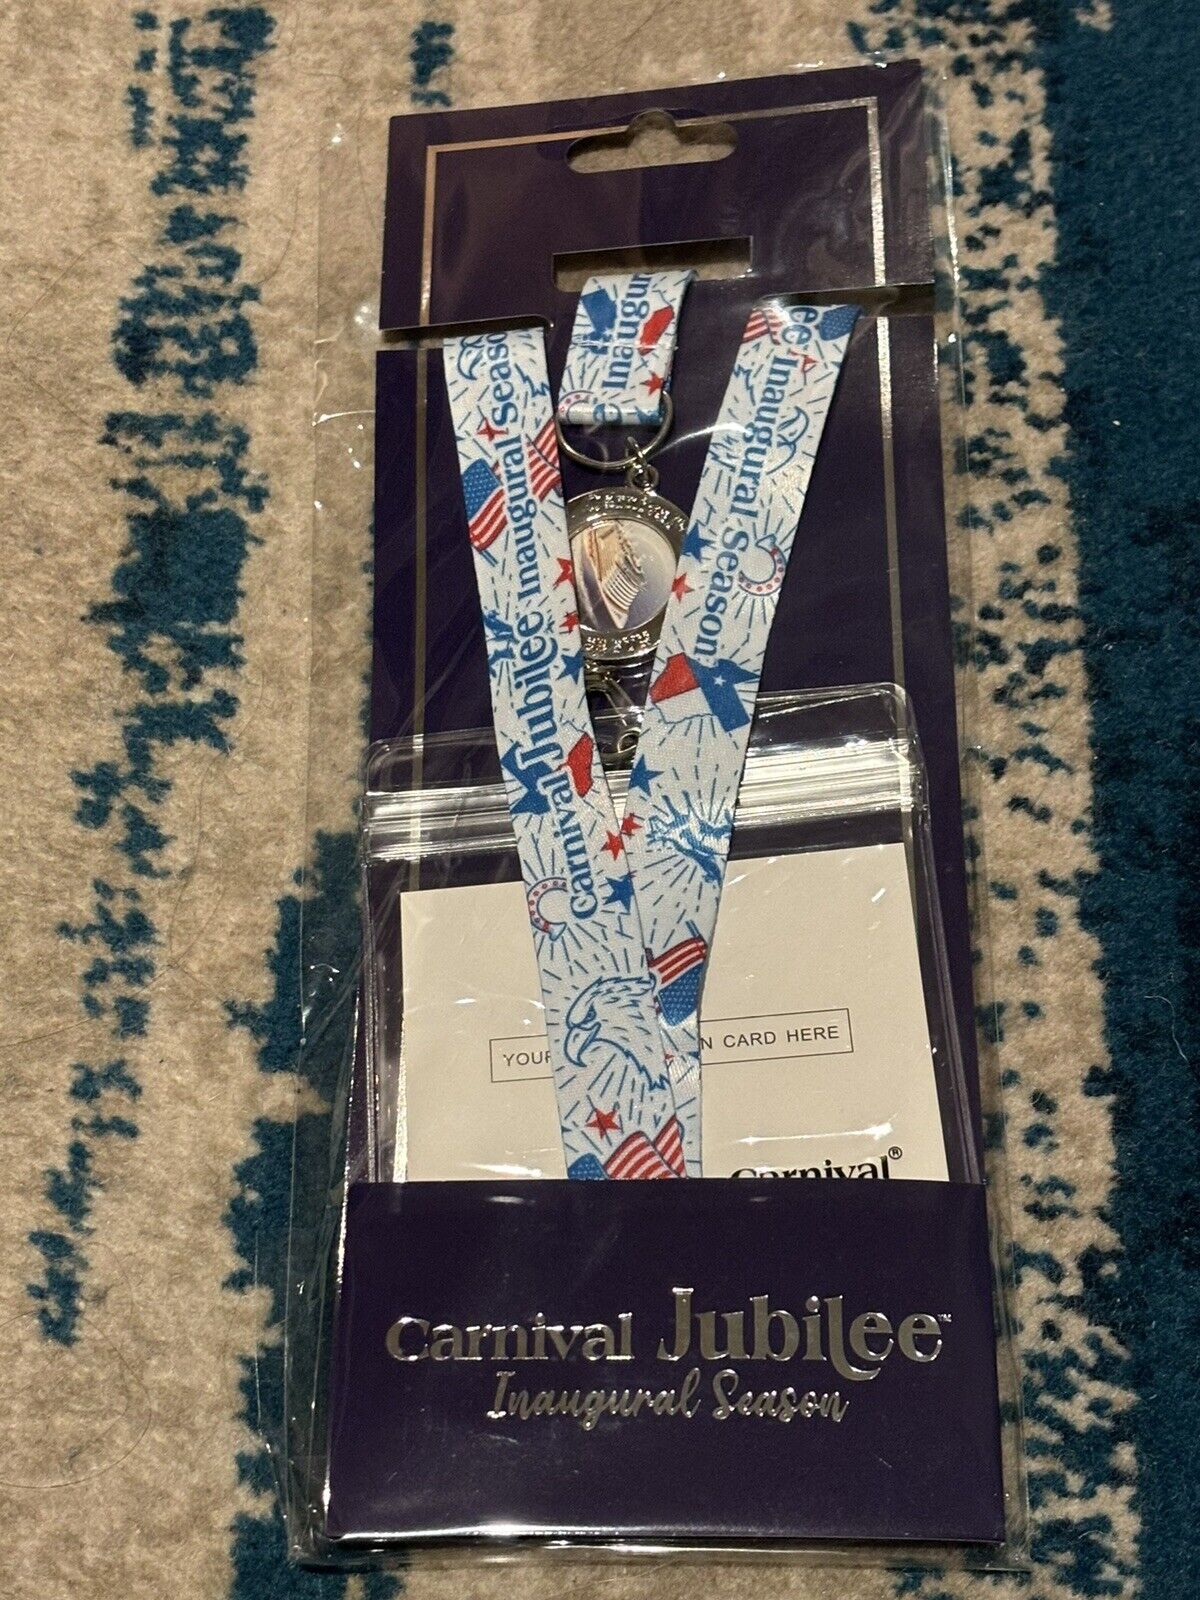 Carnival Cruise Lines Carnival Jubilee Inaugural Season Lanyard And Card Holder